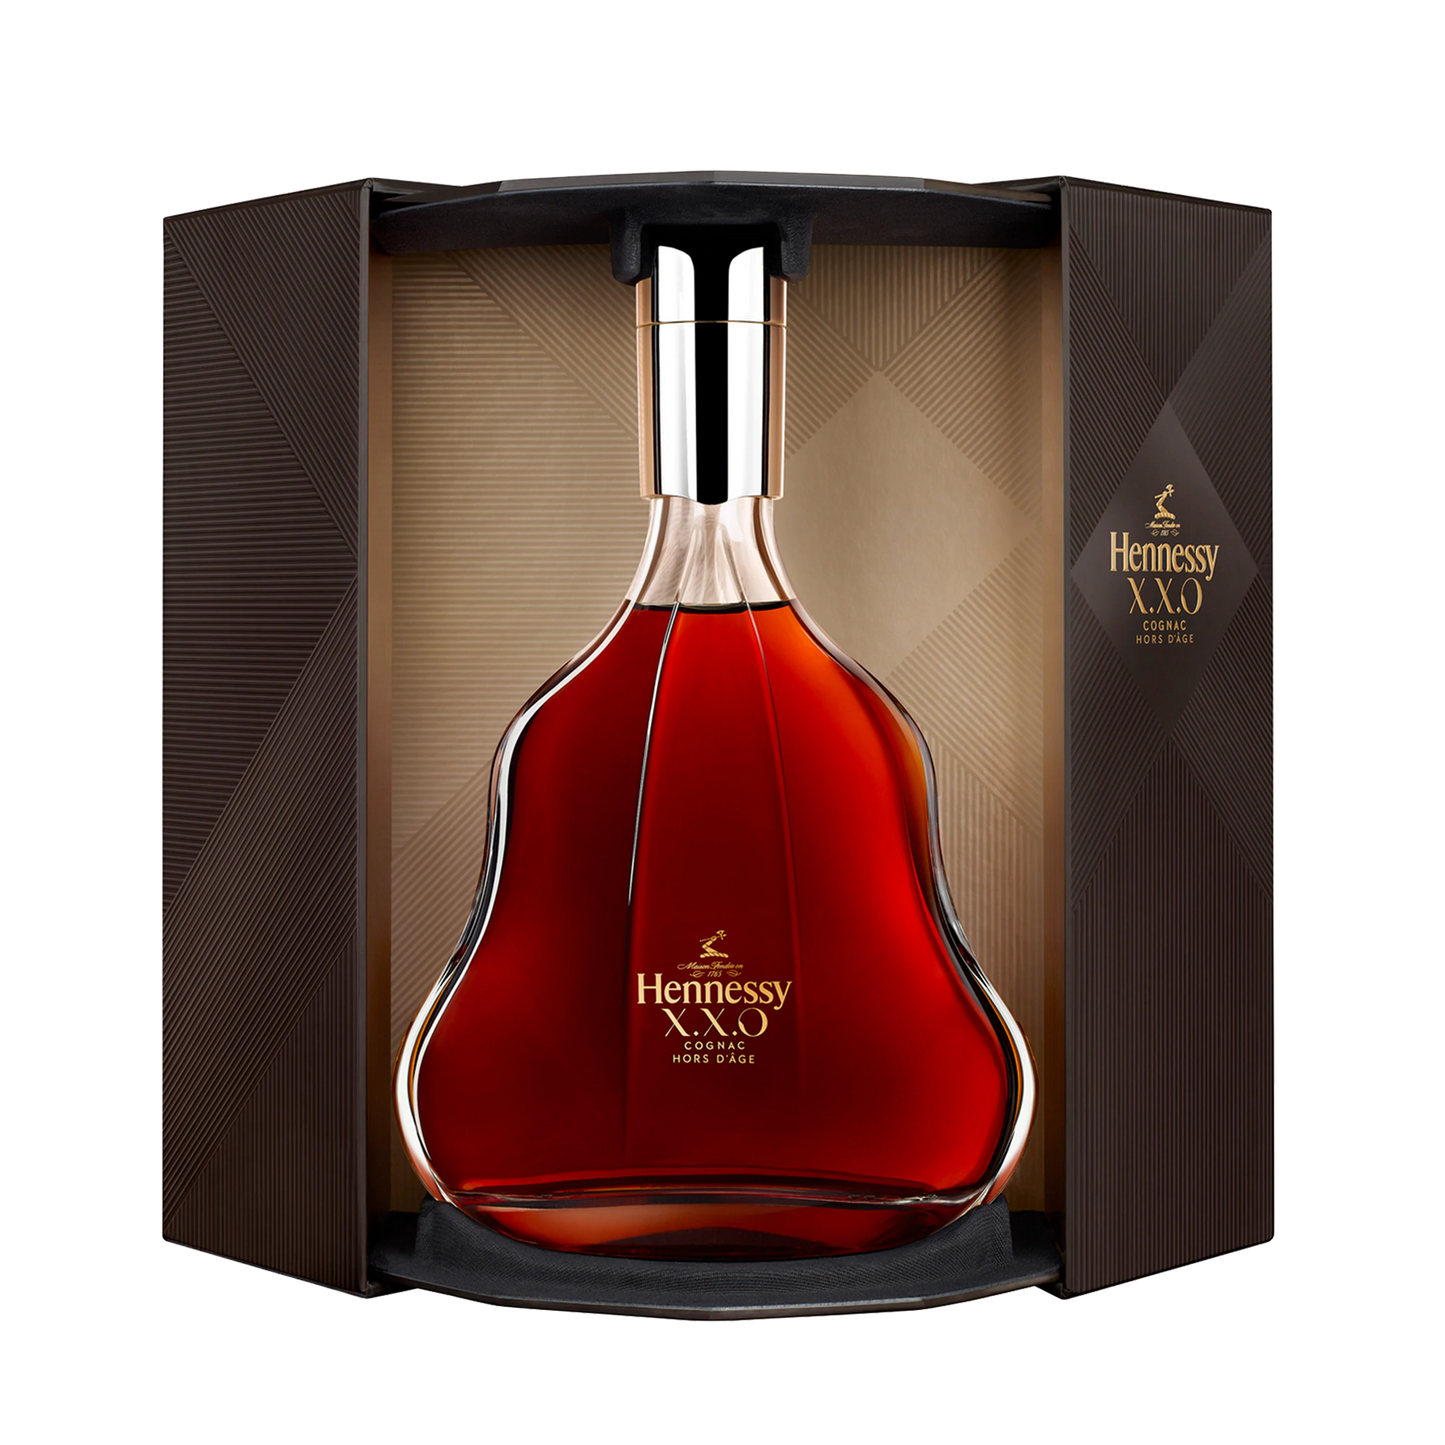 Hennessy X.X.O Cognac